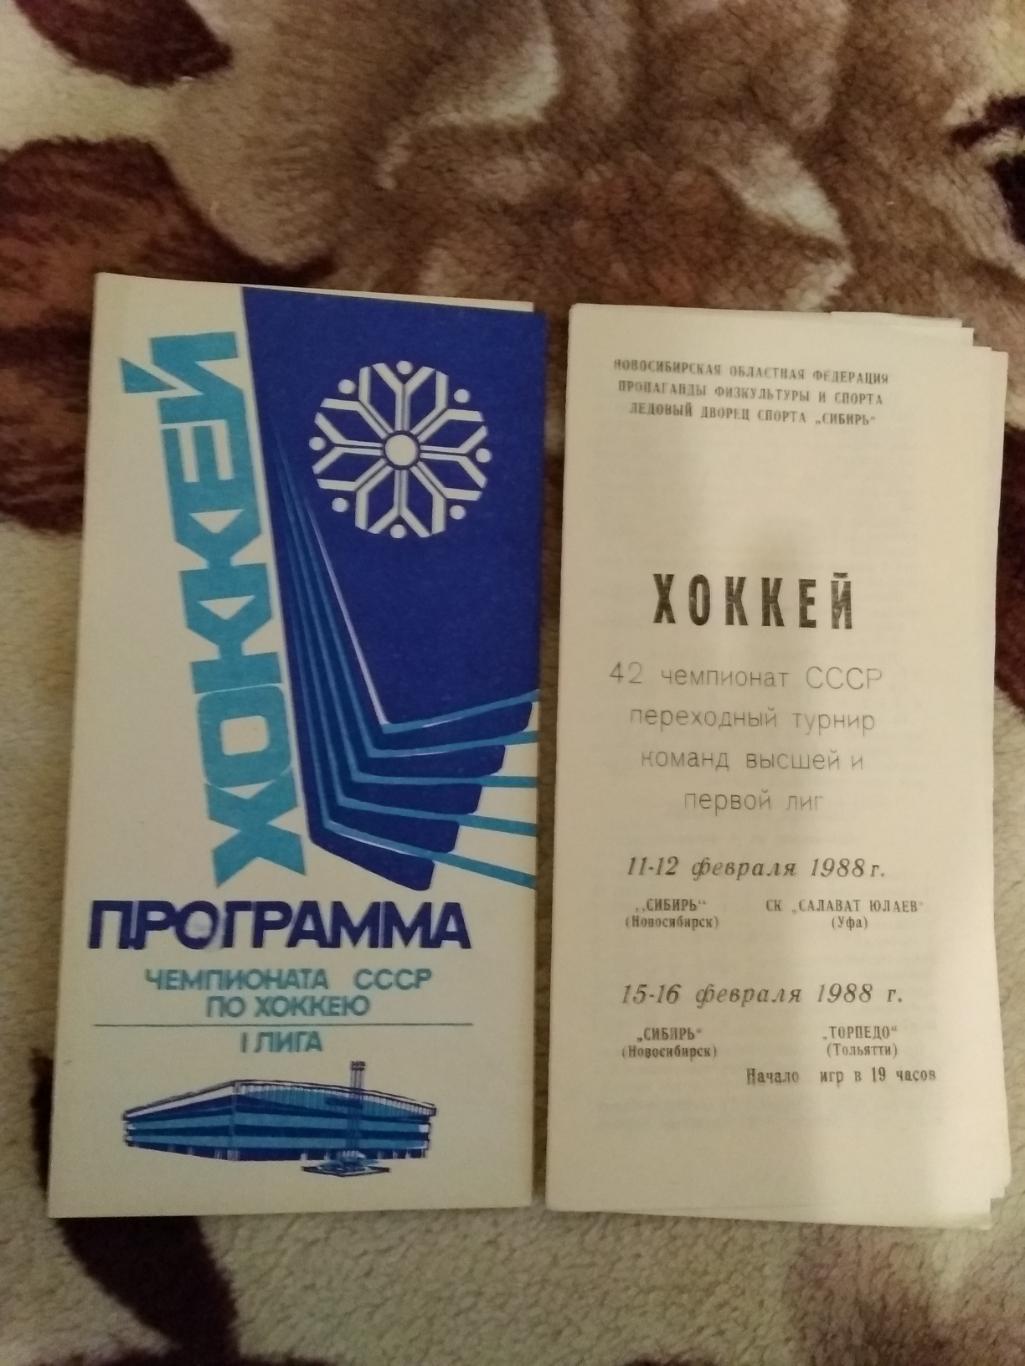 Сибирь (Новосибирск) - Салават Юлаев (Уфа),Торпедо (Тольятти) 11-16.02.1988.